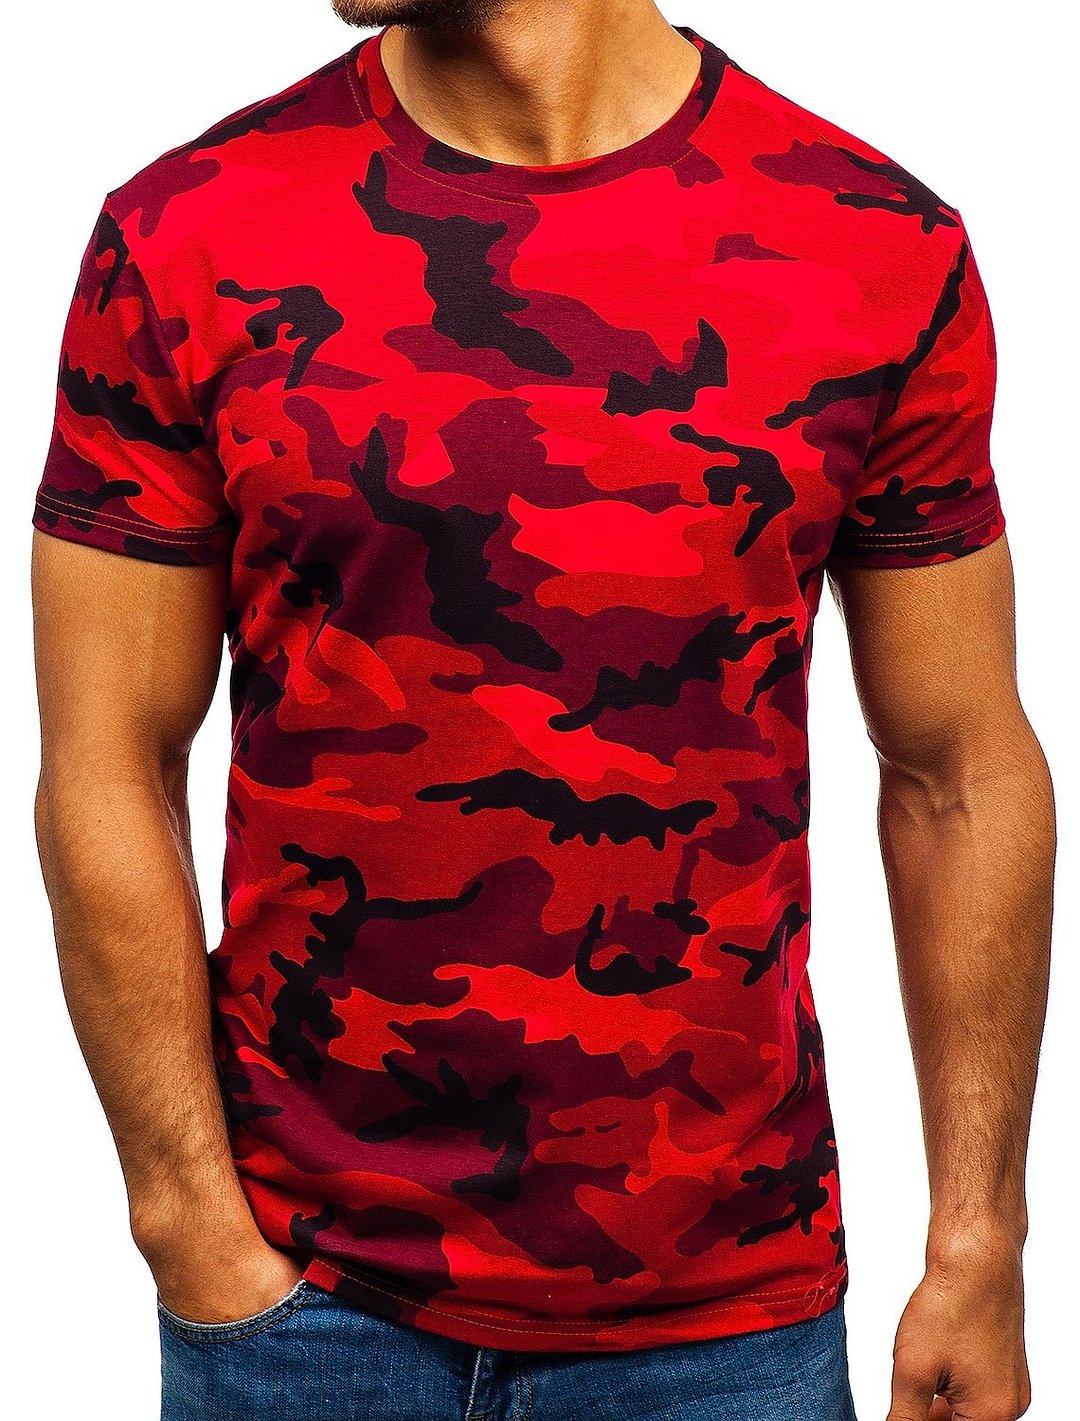 Men's Tee T shirt Shirt Military Short Sleeve Daily Tops Cotton Basic Casual Streetwear Round Neck-Corachic